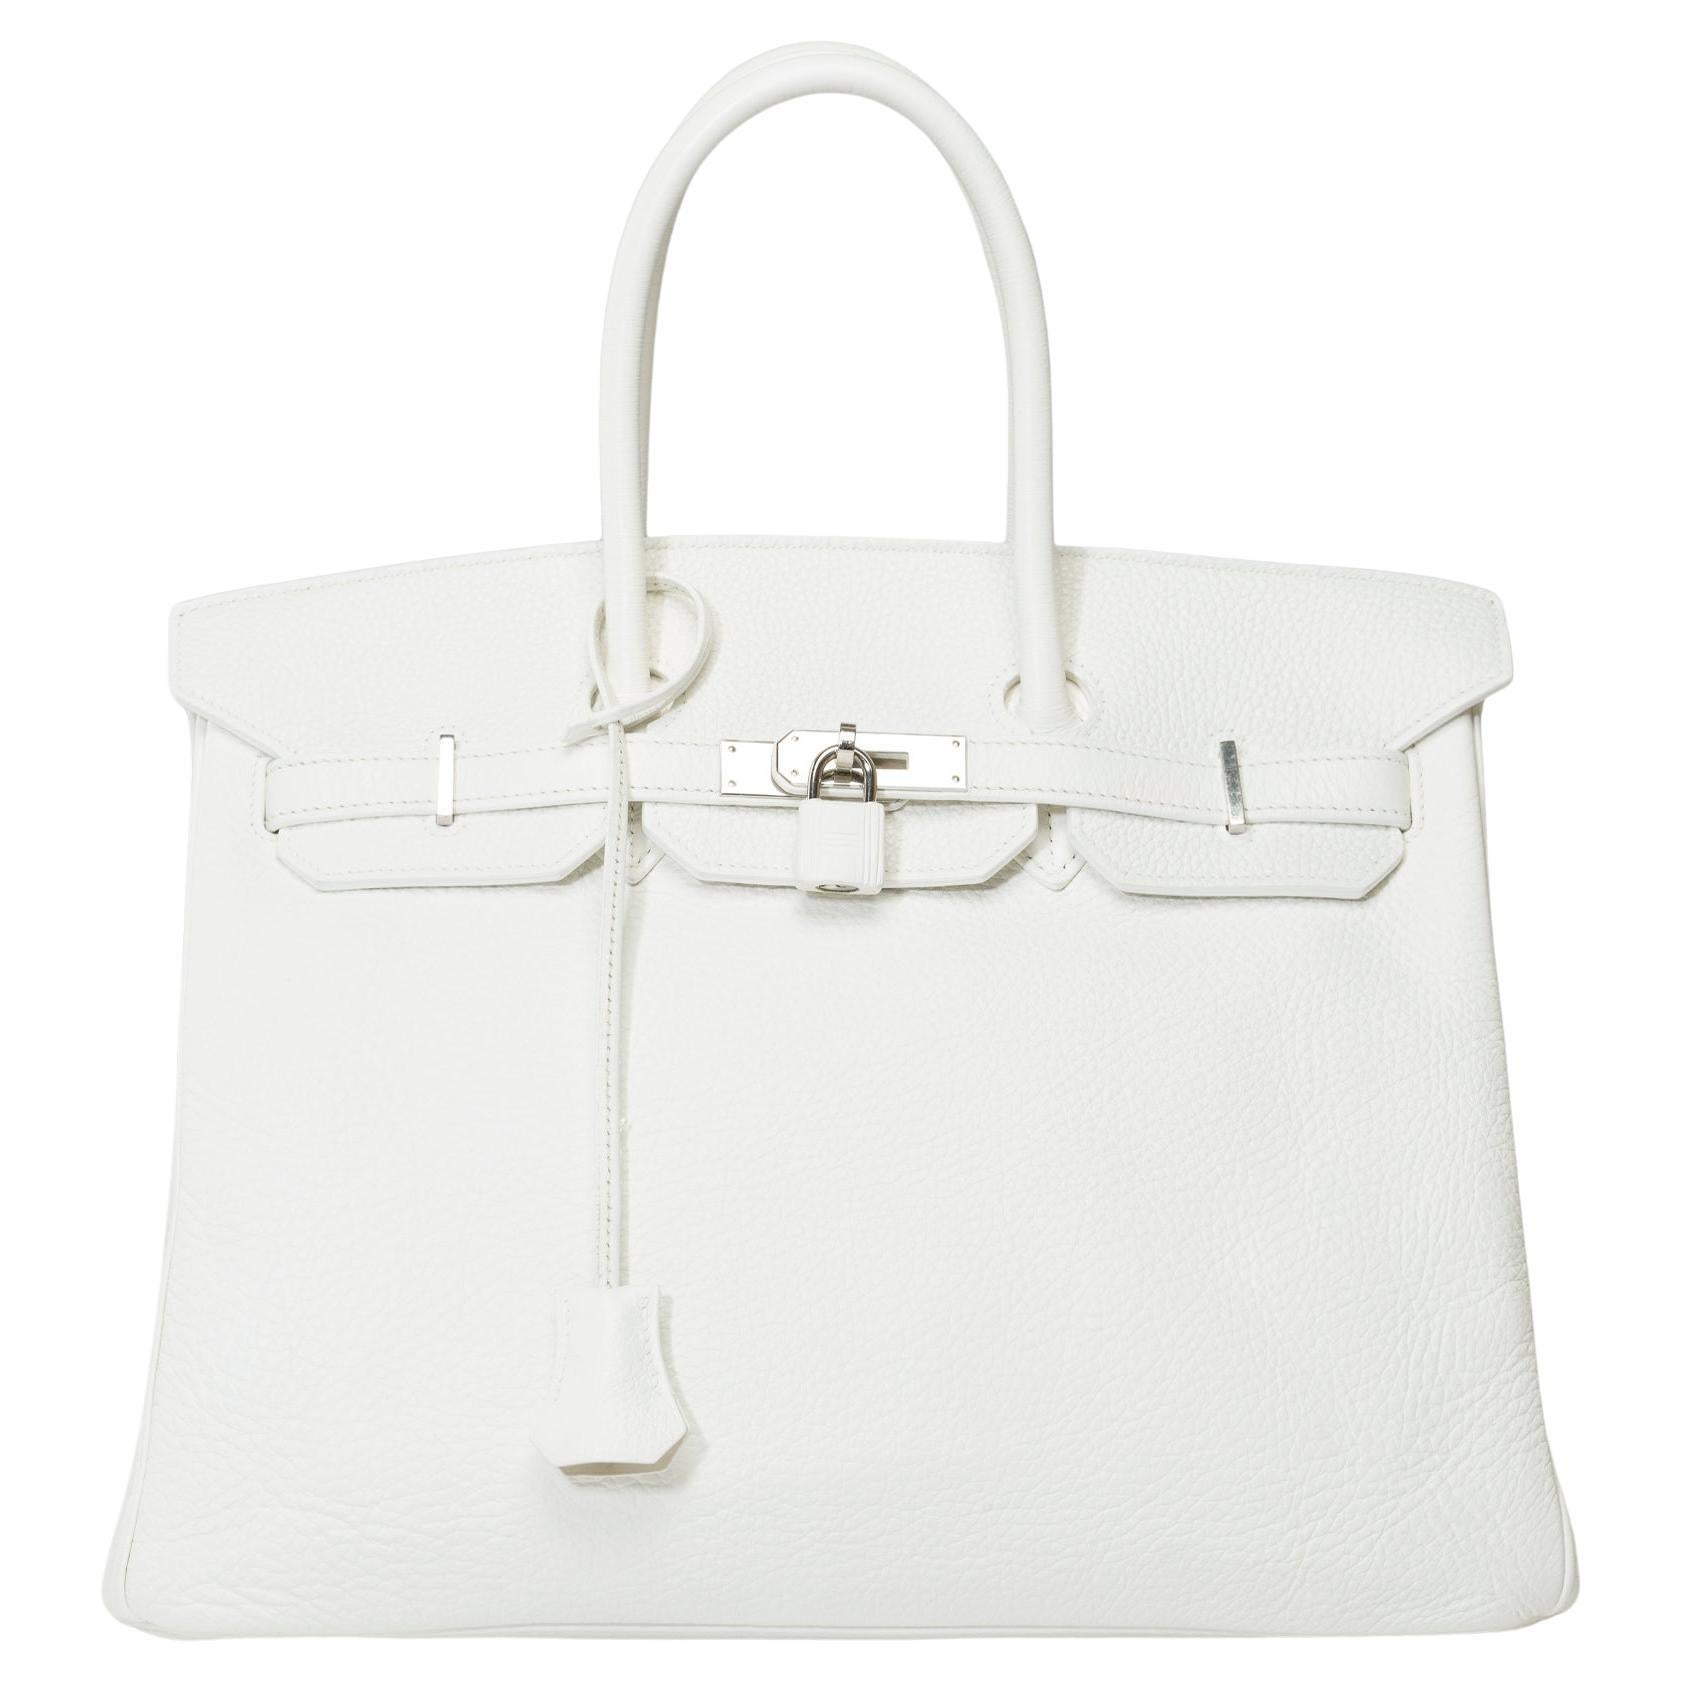 Stunning Hermès Birkin 35 handbag in White Taurillon Clemence leather, SHW